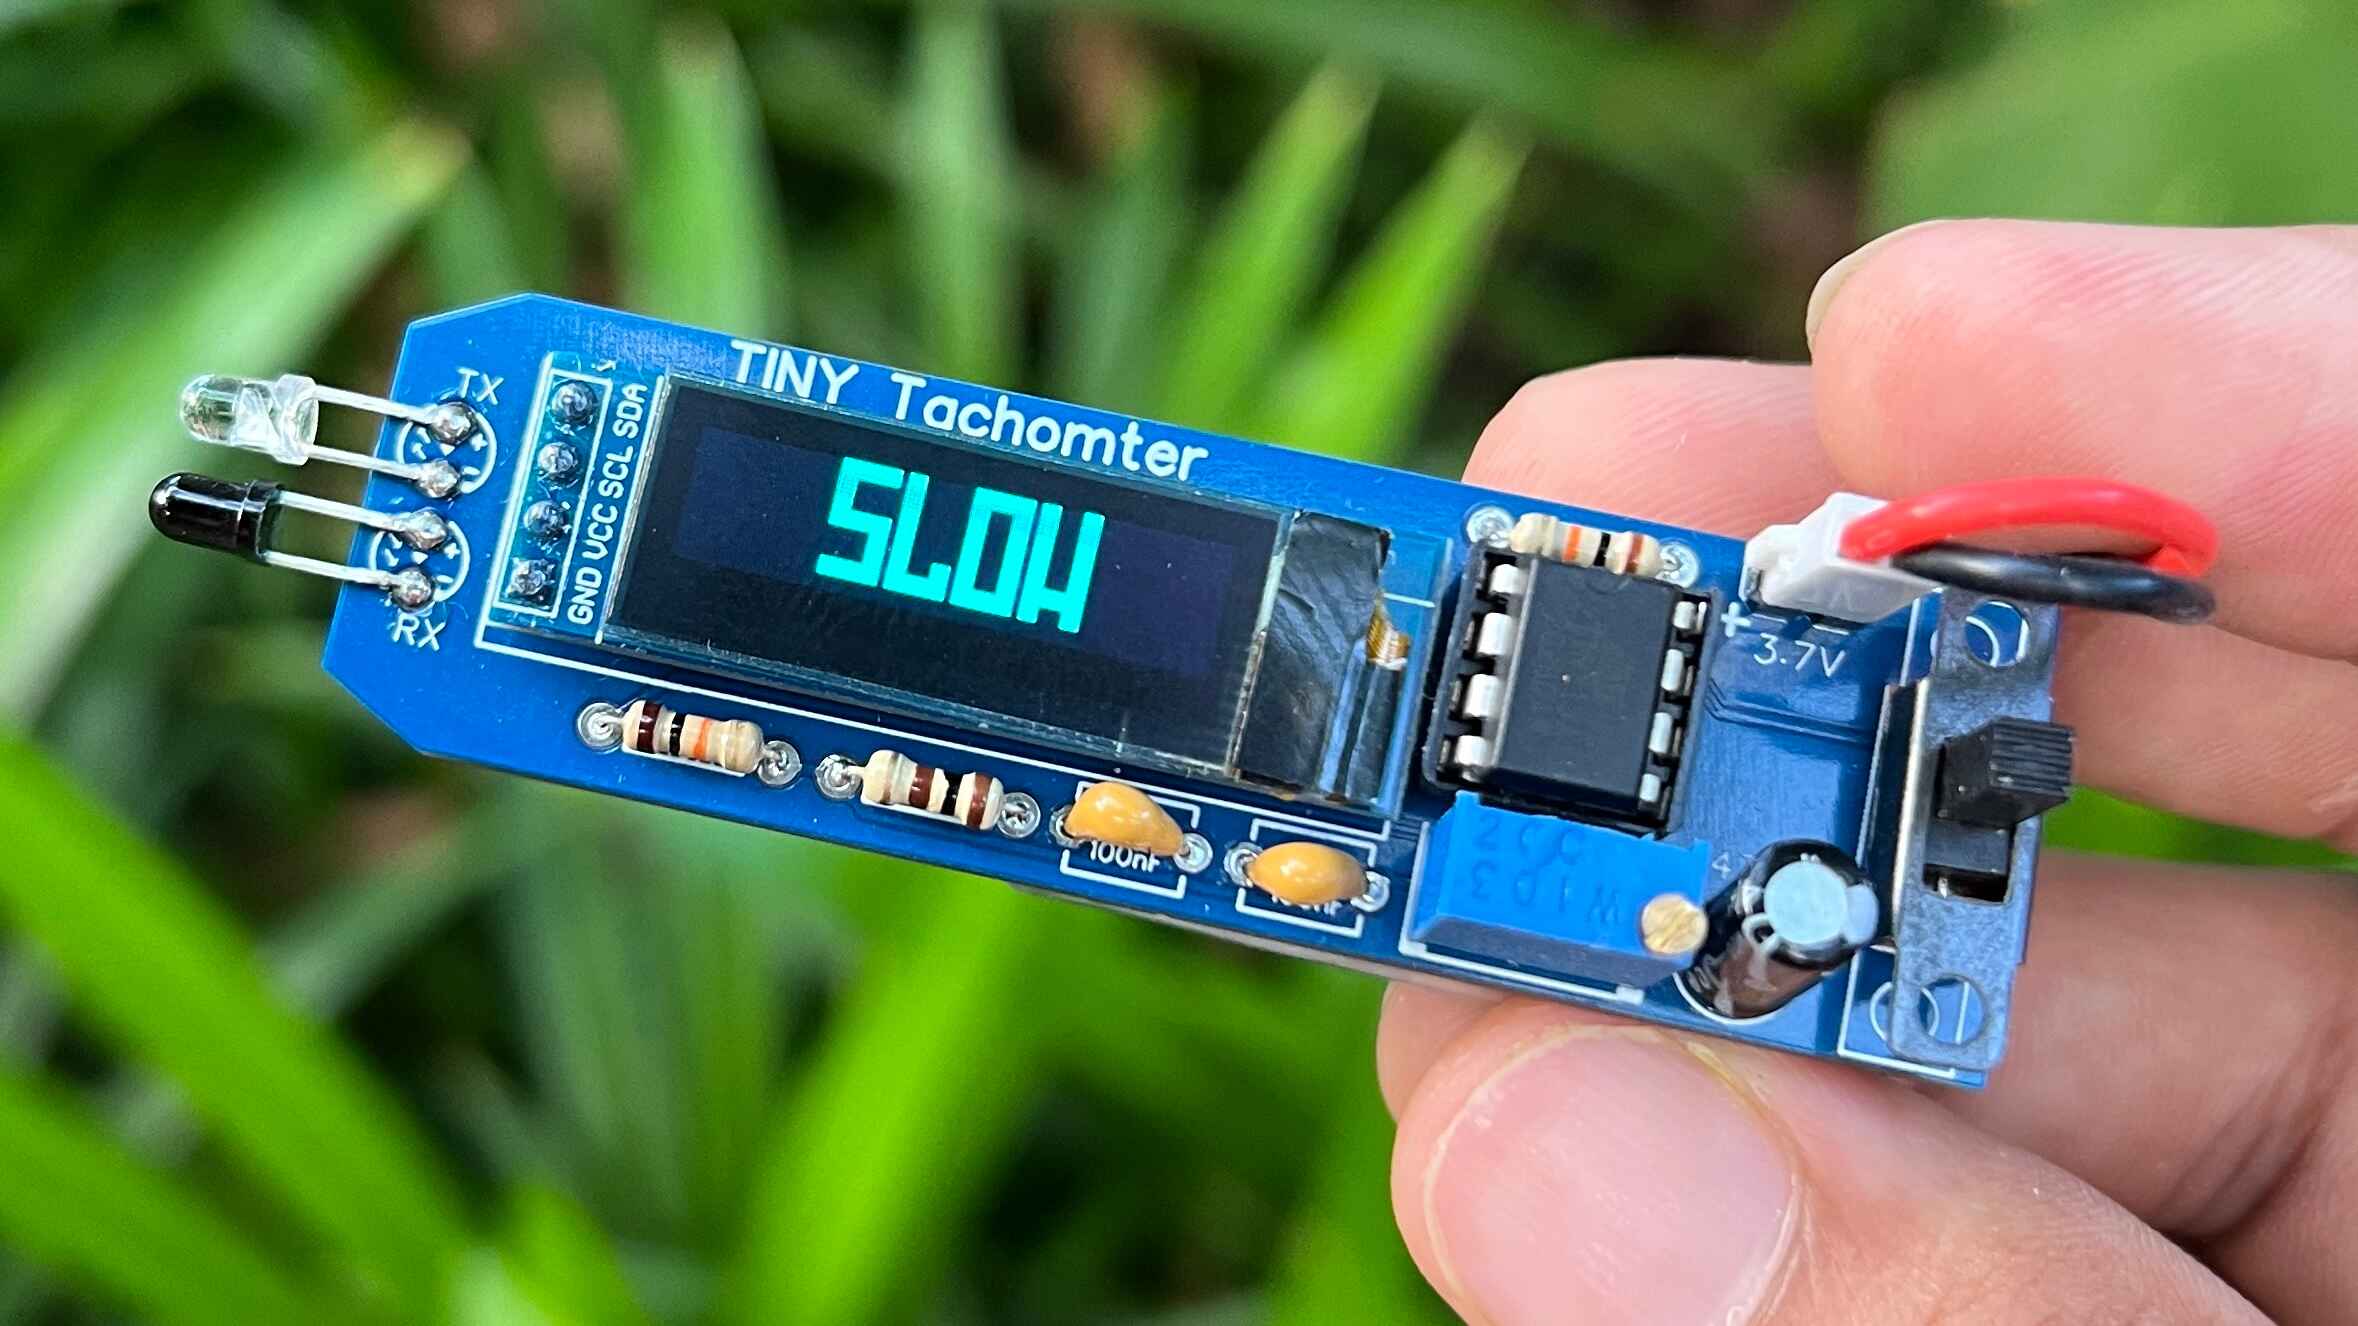 Tiny Tachometer | ATtiny13A powered RPM meter